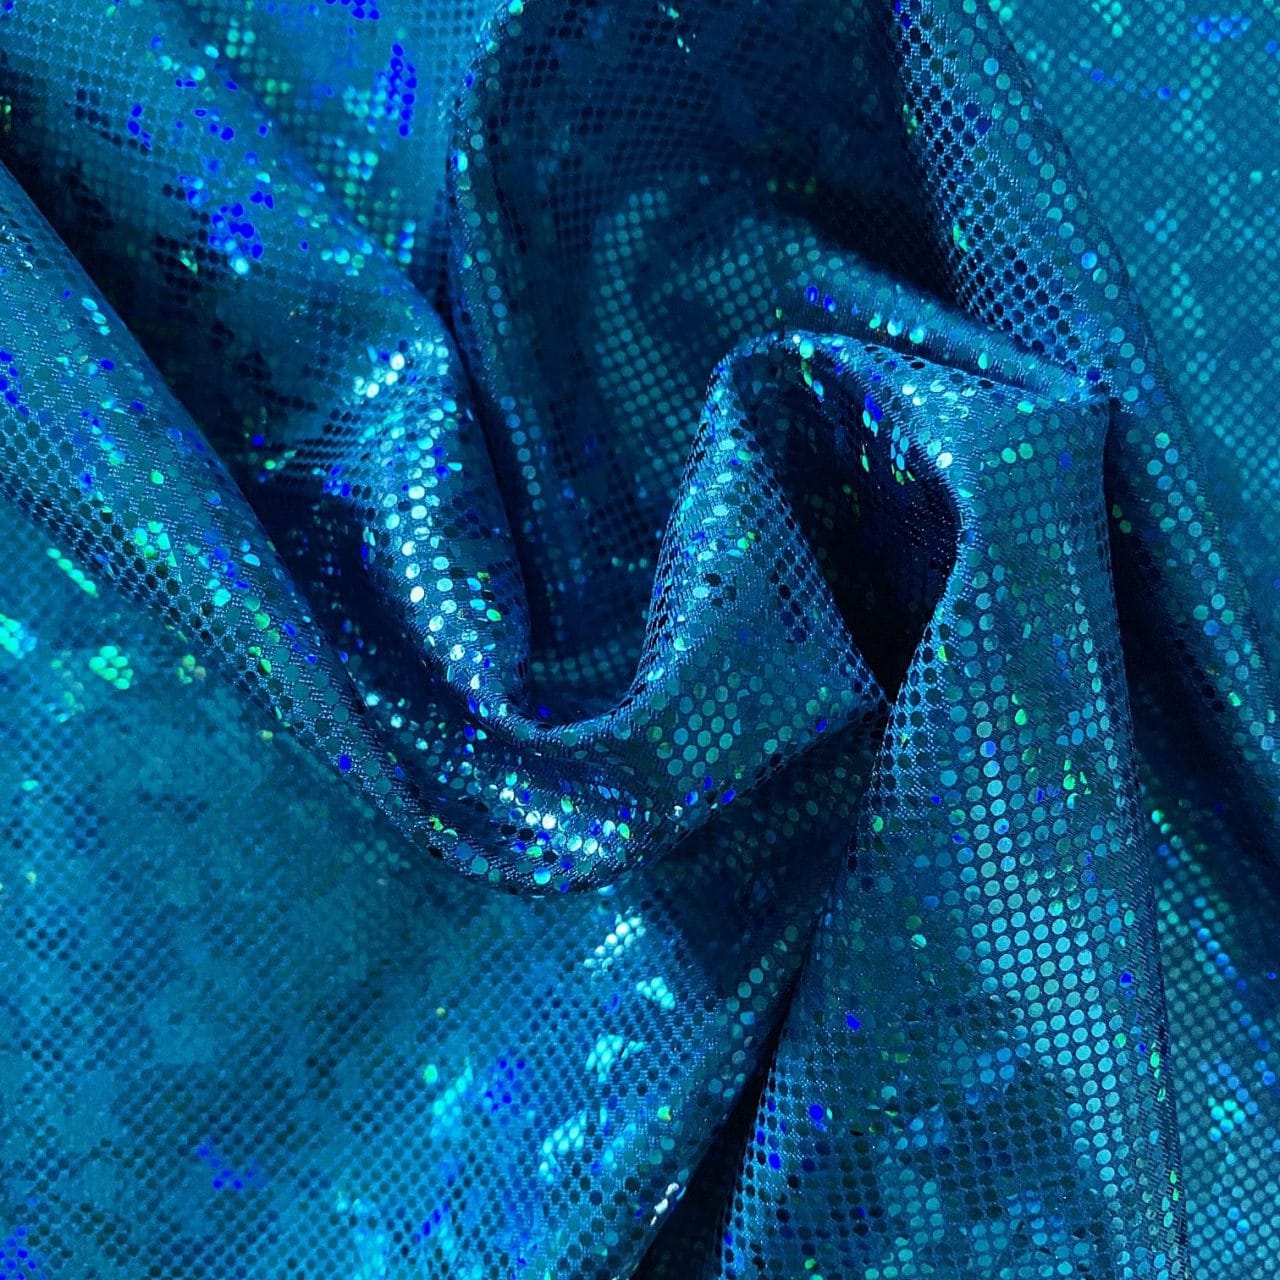 https://www.solidstonefabrics.com/wp-content/uploads/2018/06/SHATTERED-GLASS-TURQUOISE-OCEAN-BLUE-CLOSEUP.jpg